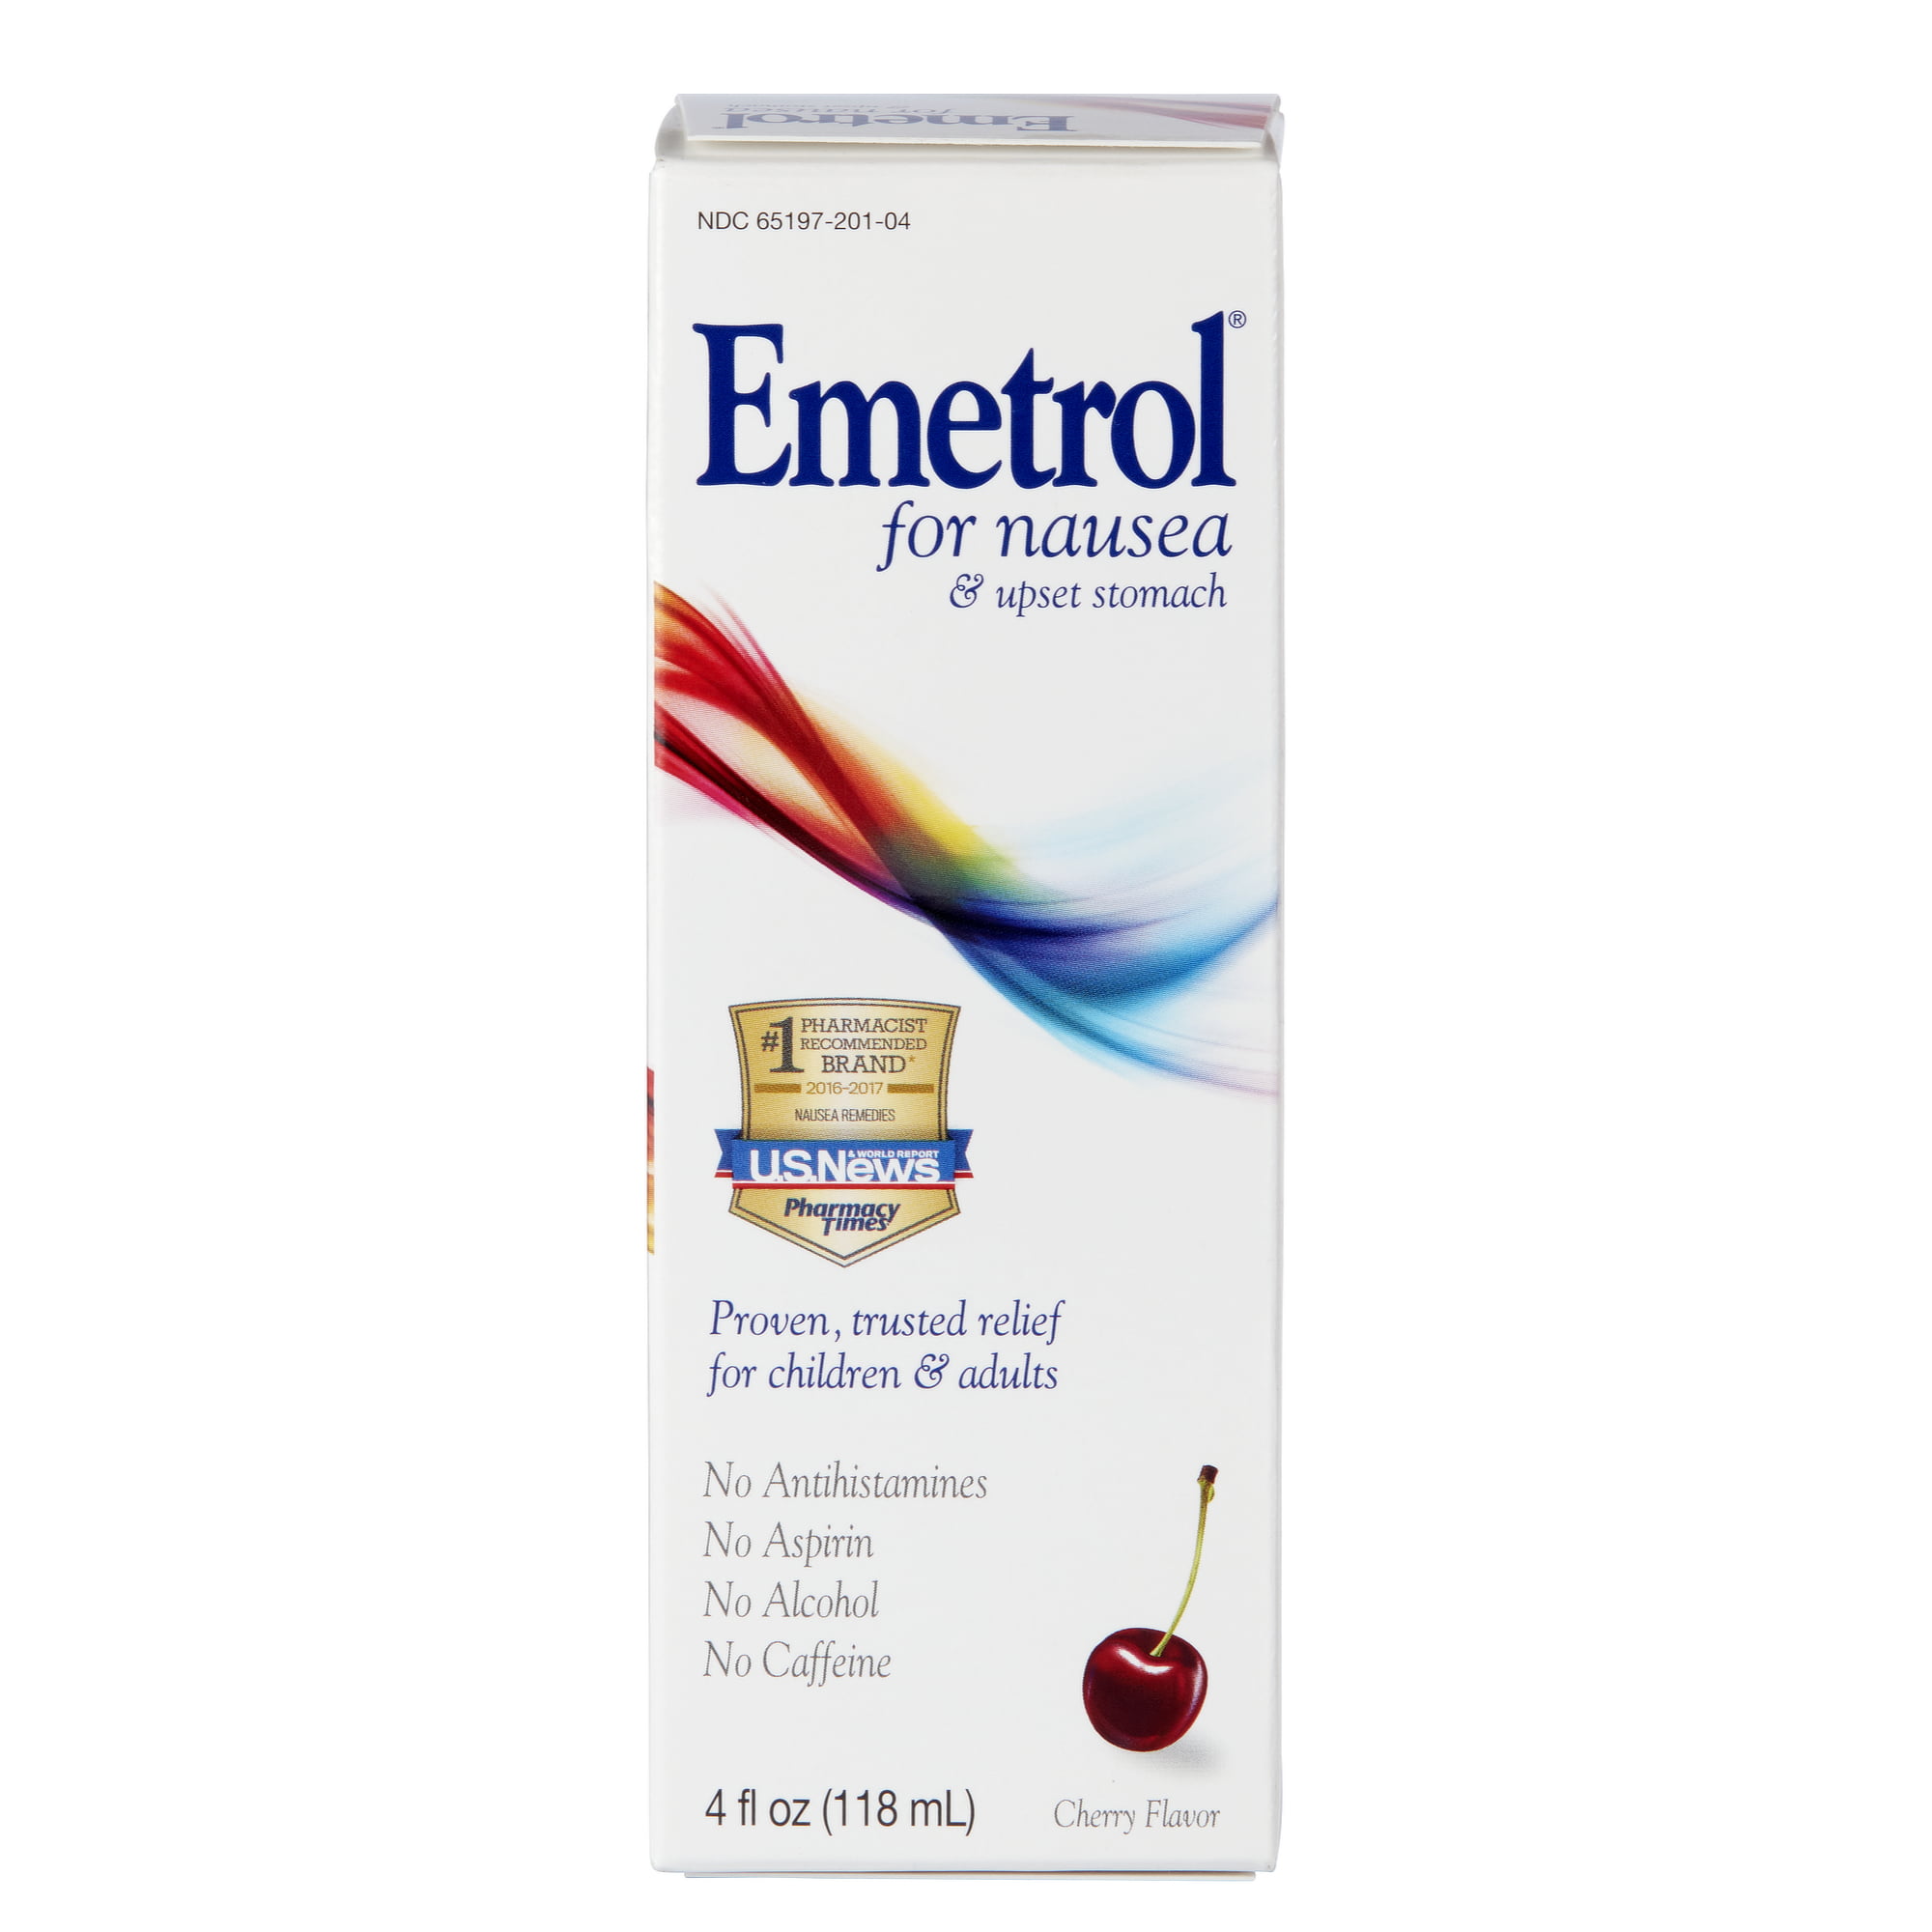 emetrol nausea and upset stomach relief liquid medication, cherry